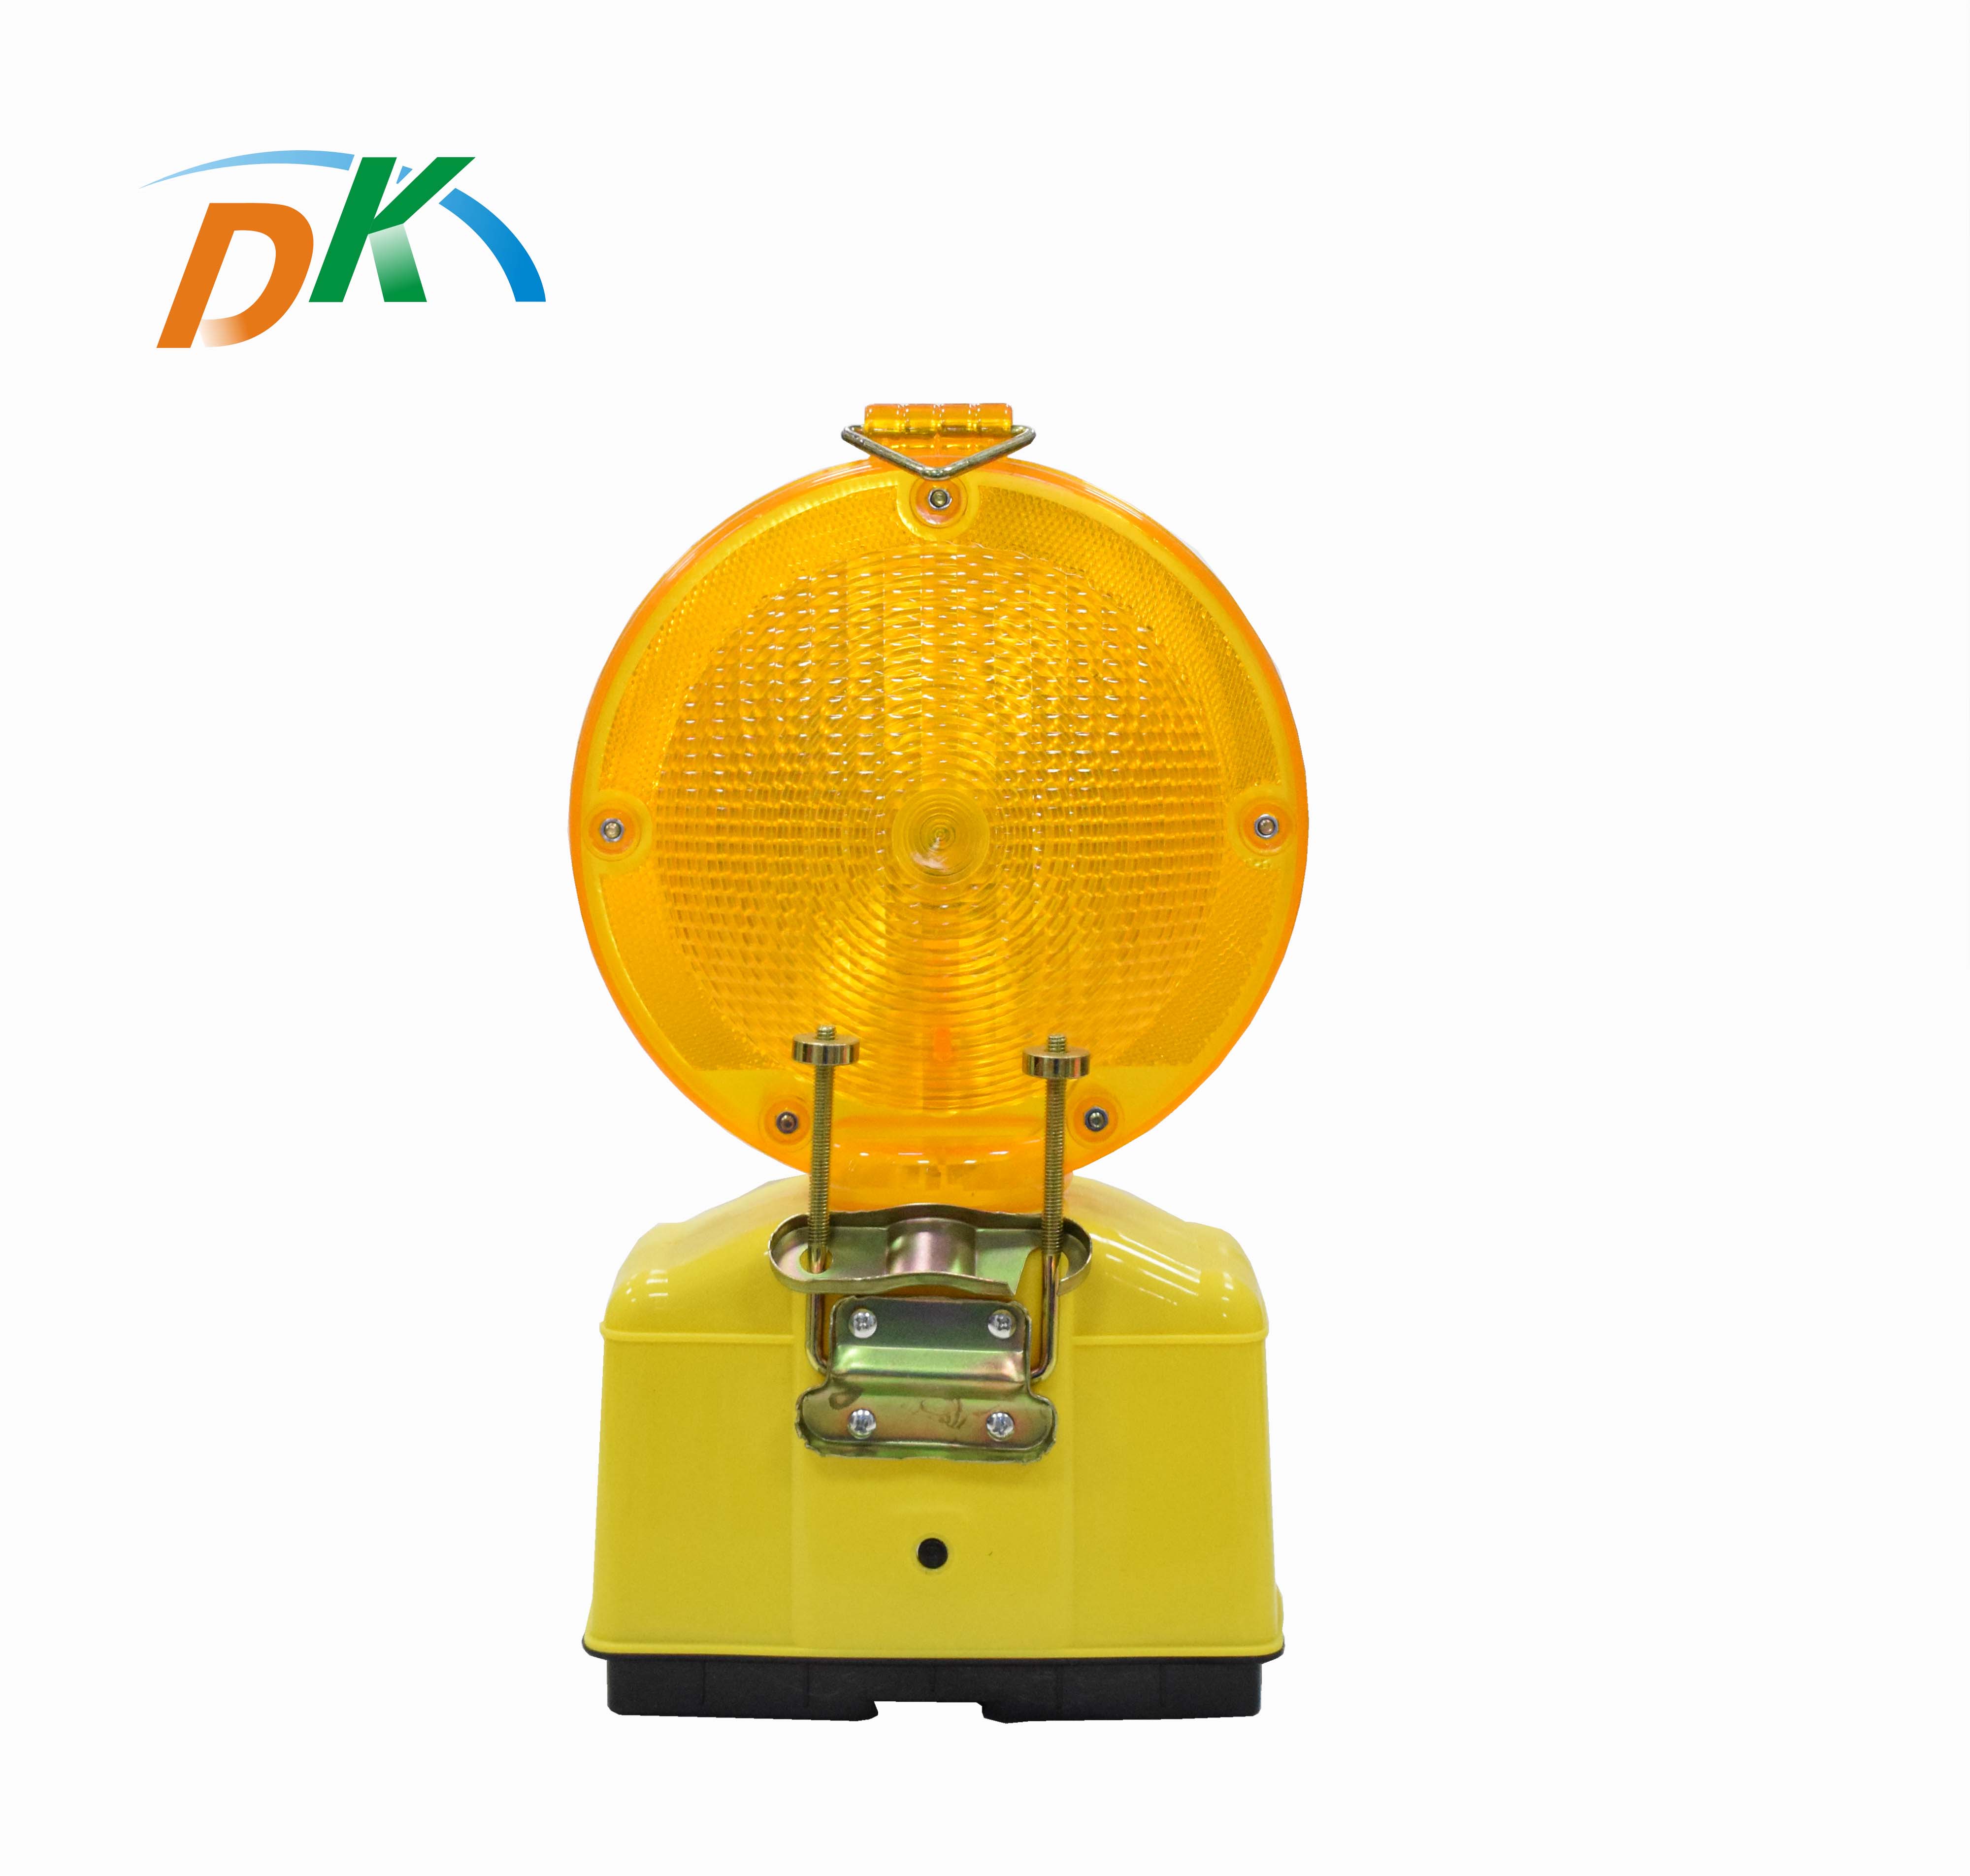 DK PC Barrier Warning Light Safety Traffic Product Manufacturer